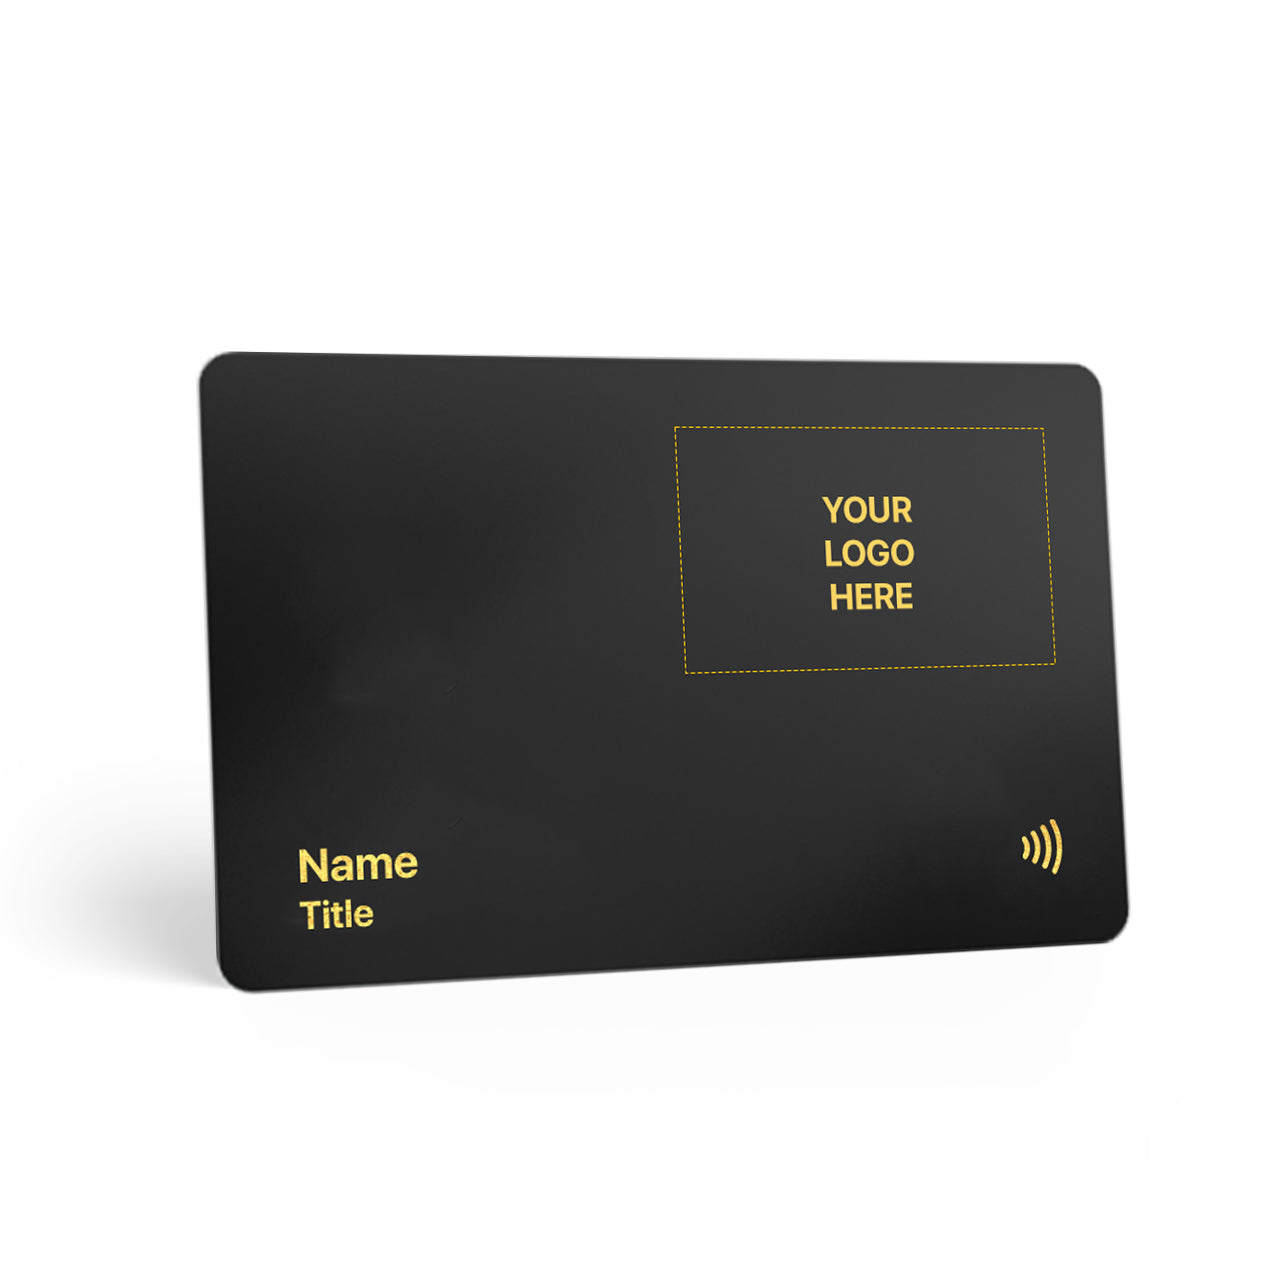 TAPiTAG Black Metal Digital Business Card Gold etch NFC Card